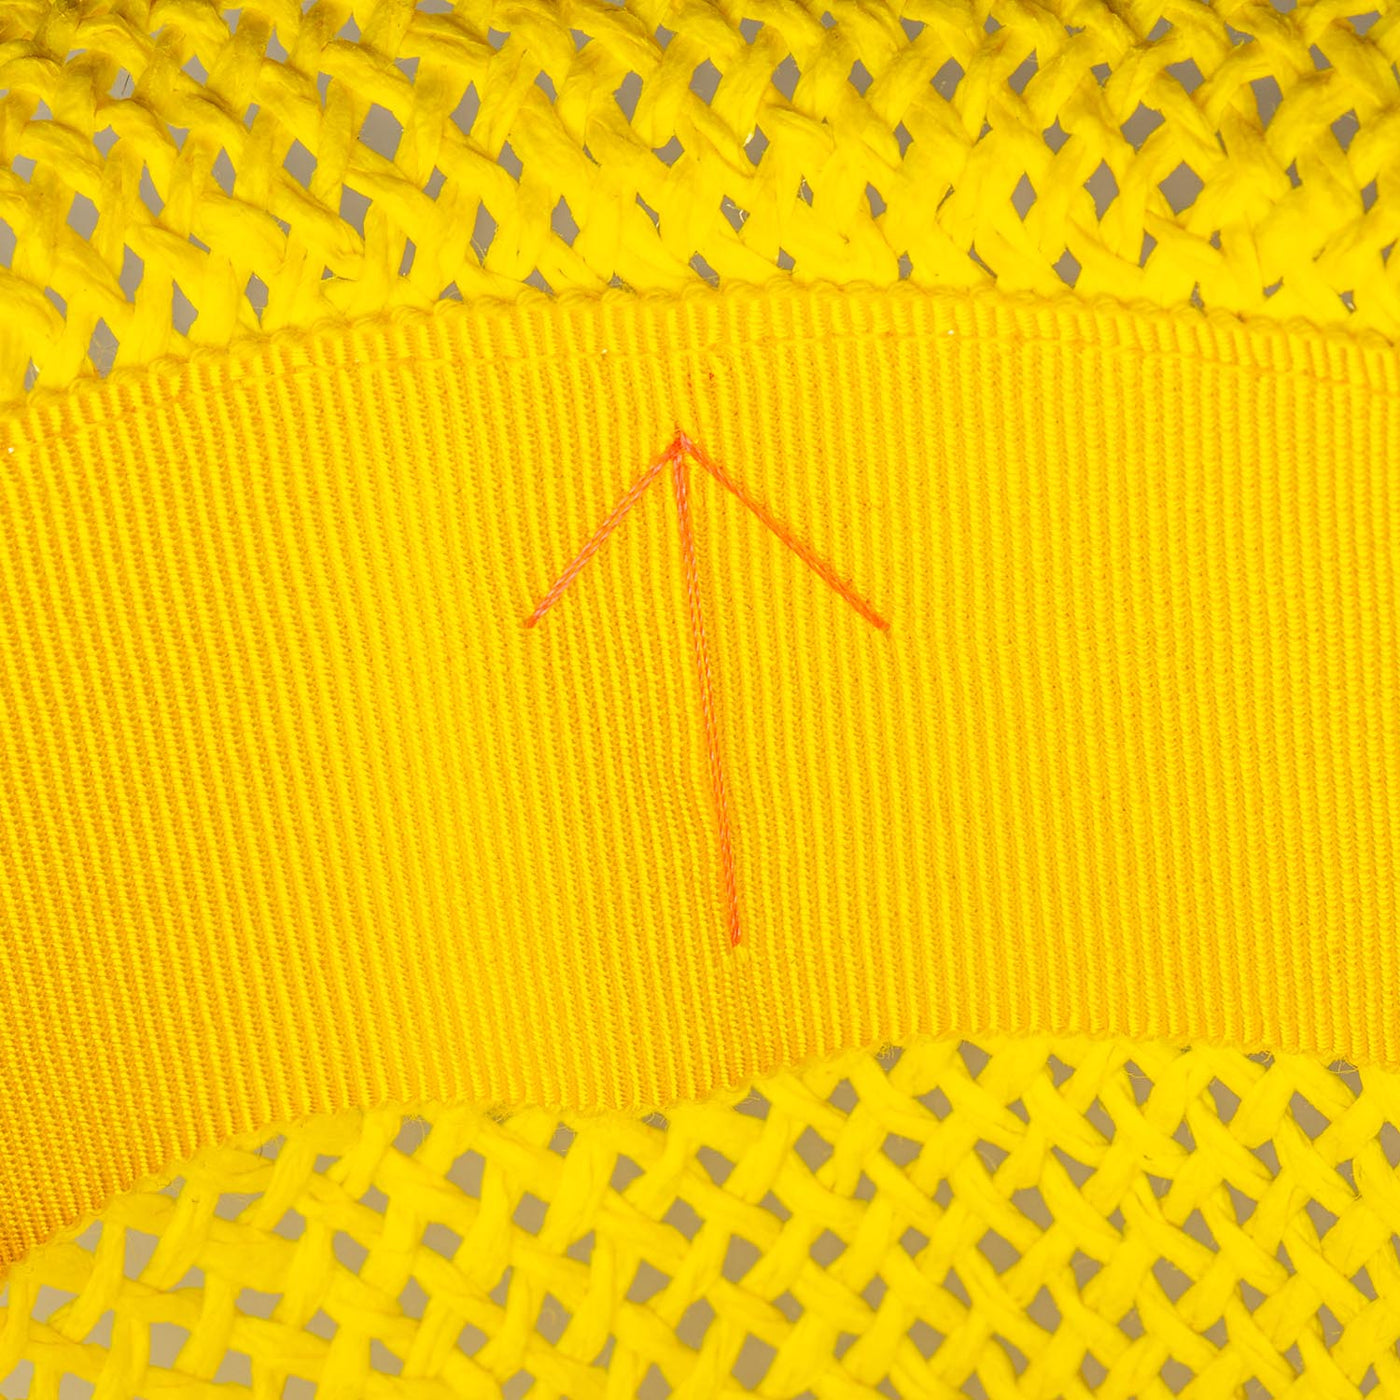 Arrow graphic inside hat  